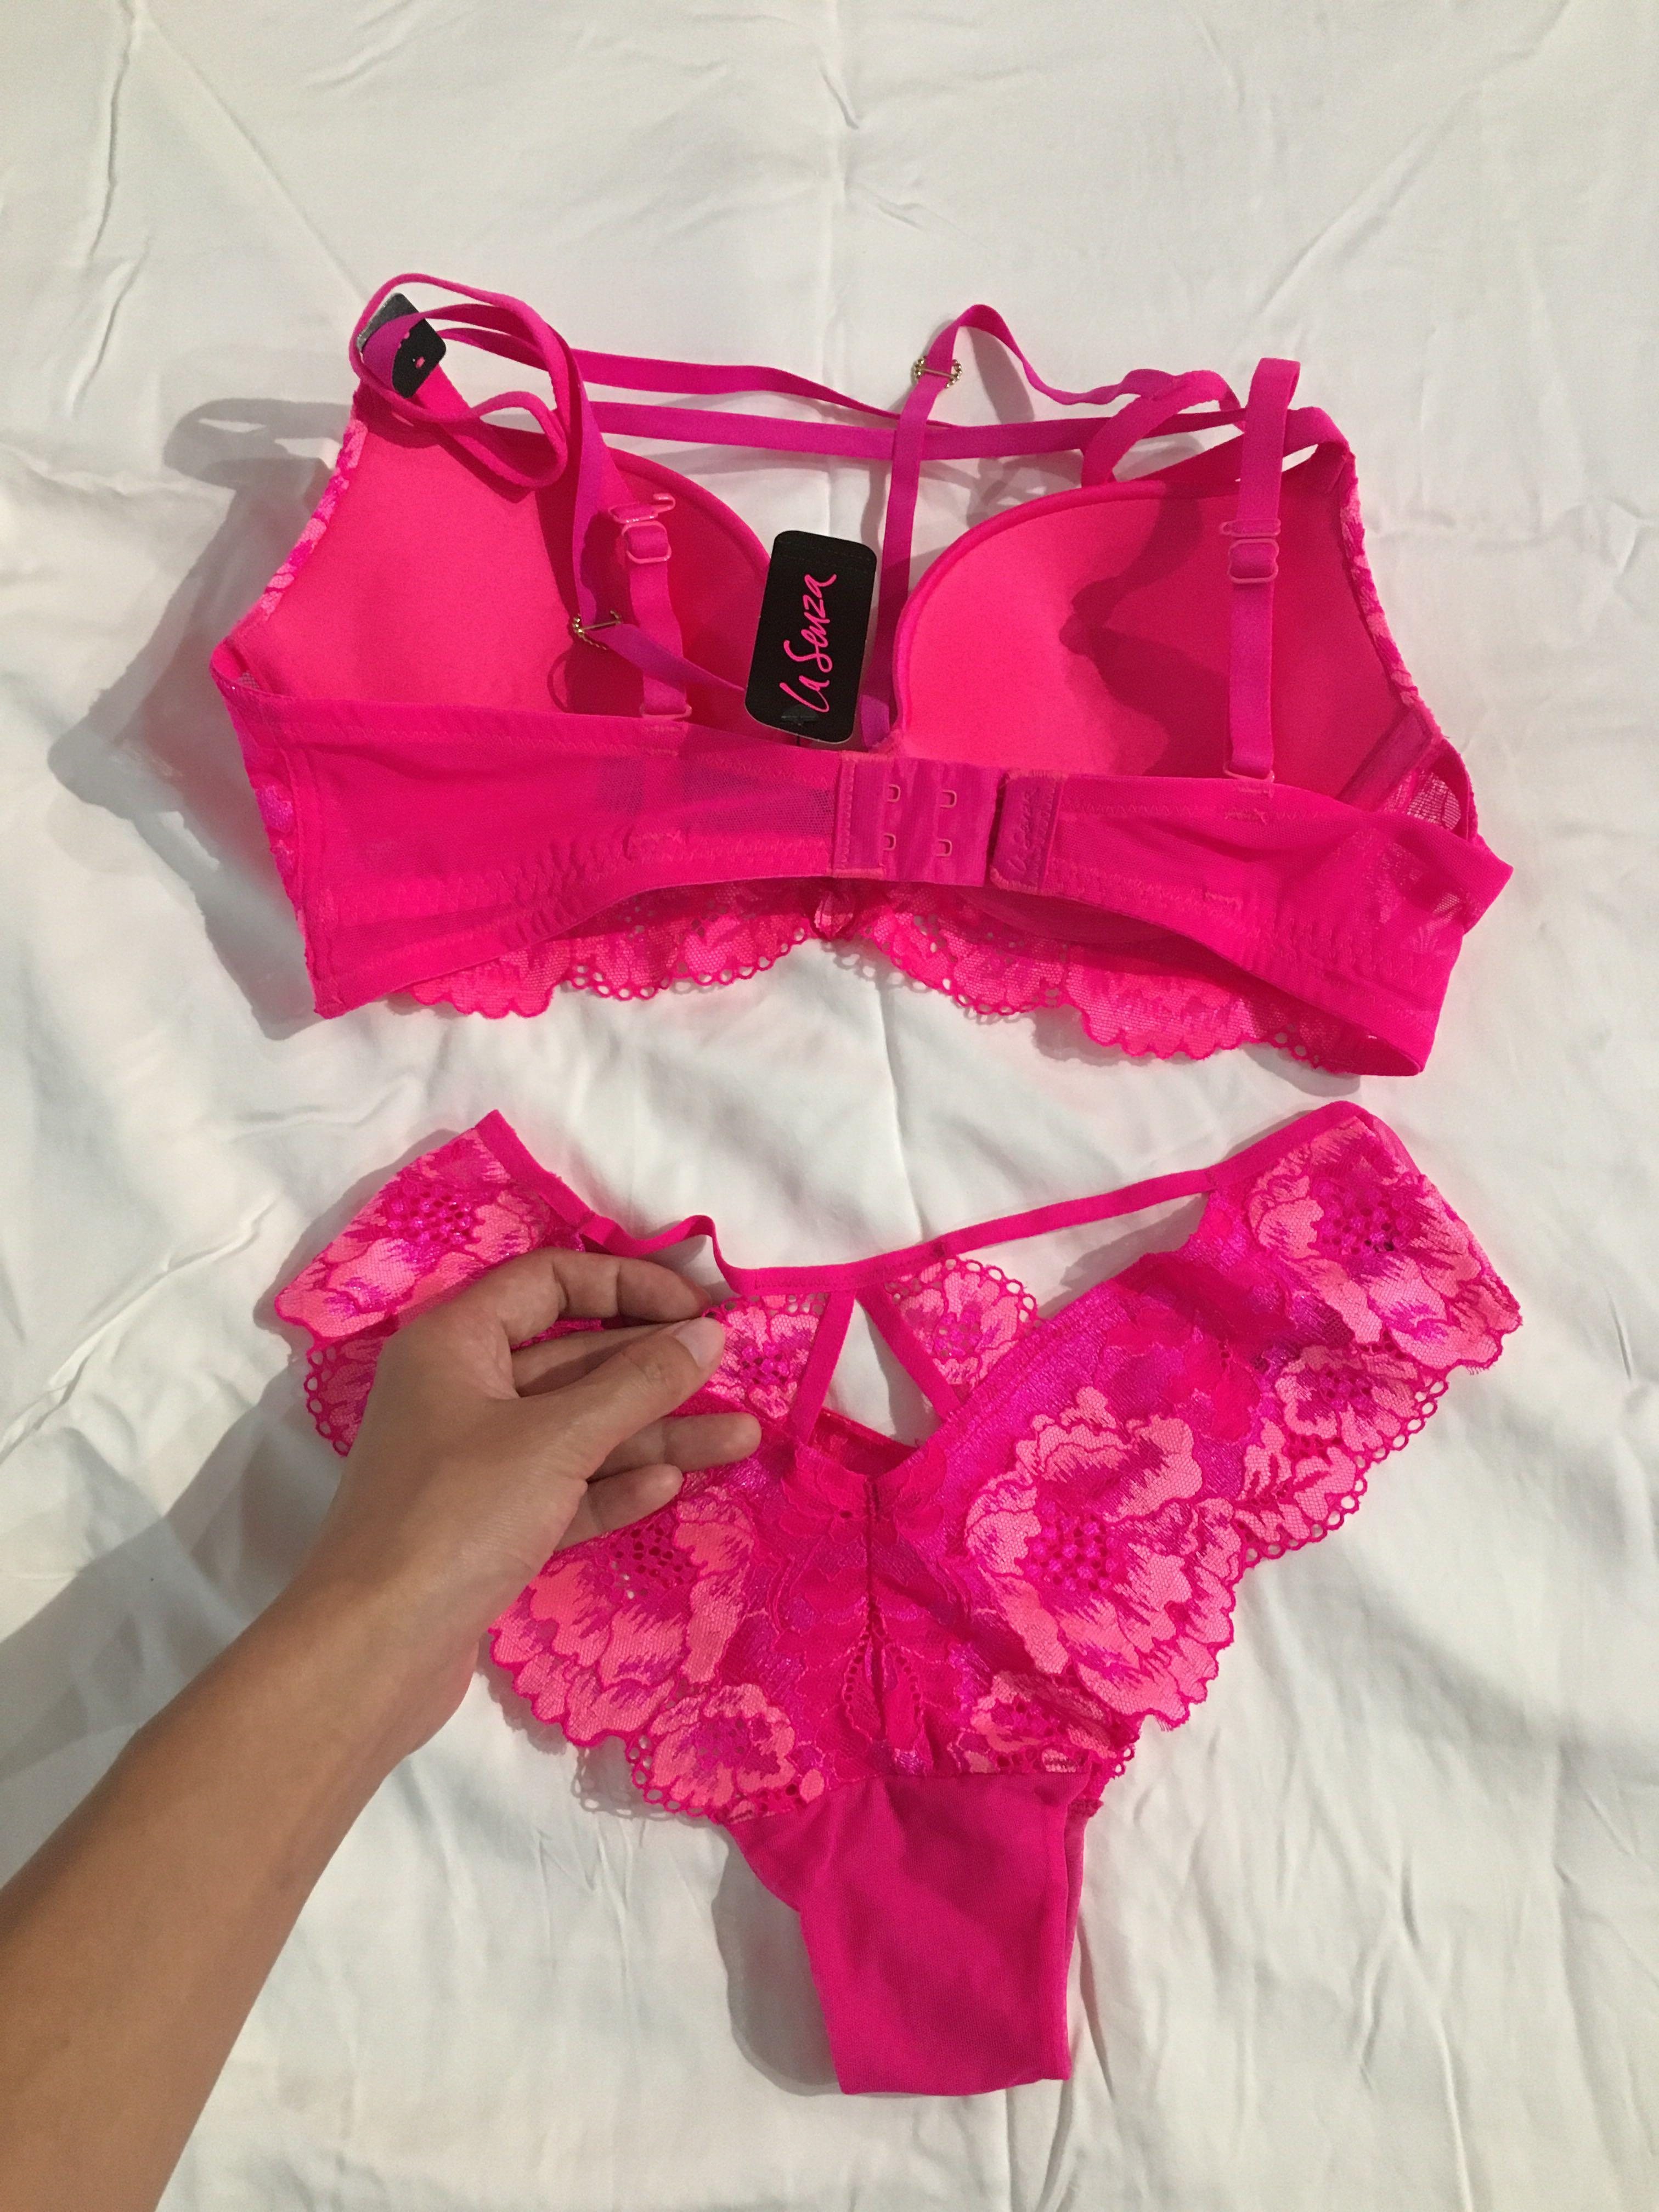 La Senza Lingerie Direct Mb Panties Medium Pop Pink: Buy Online at